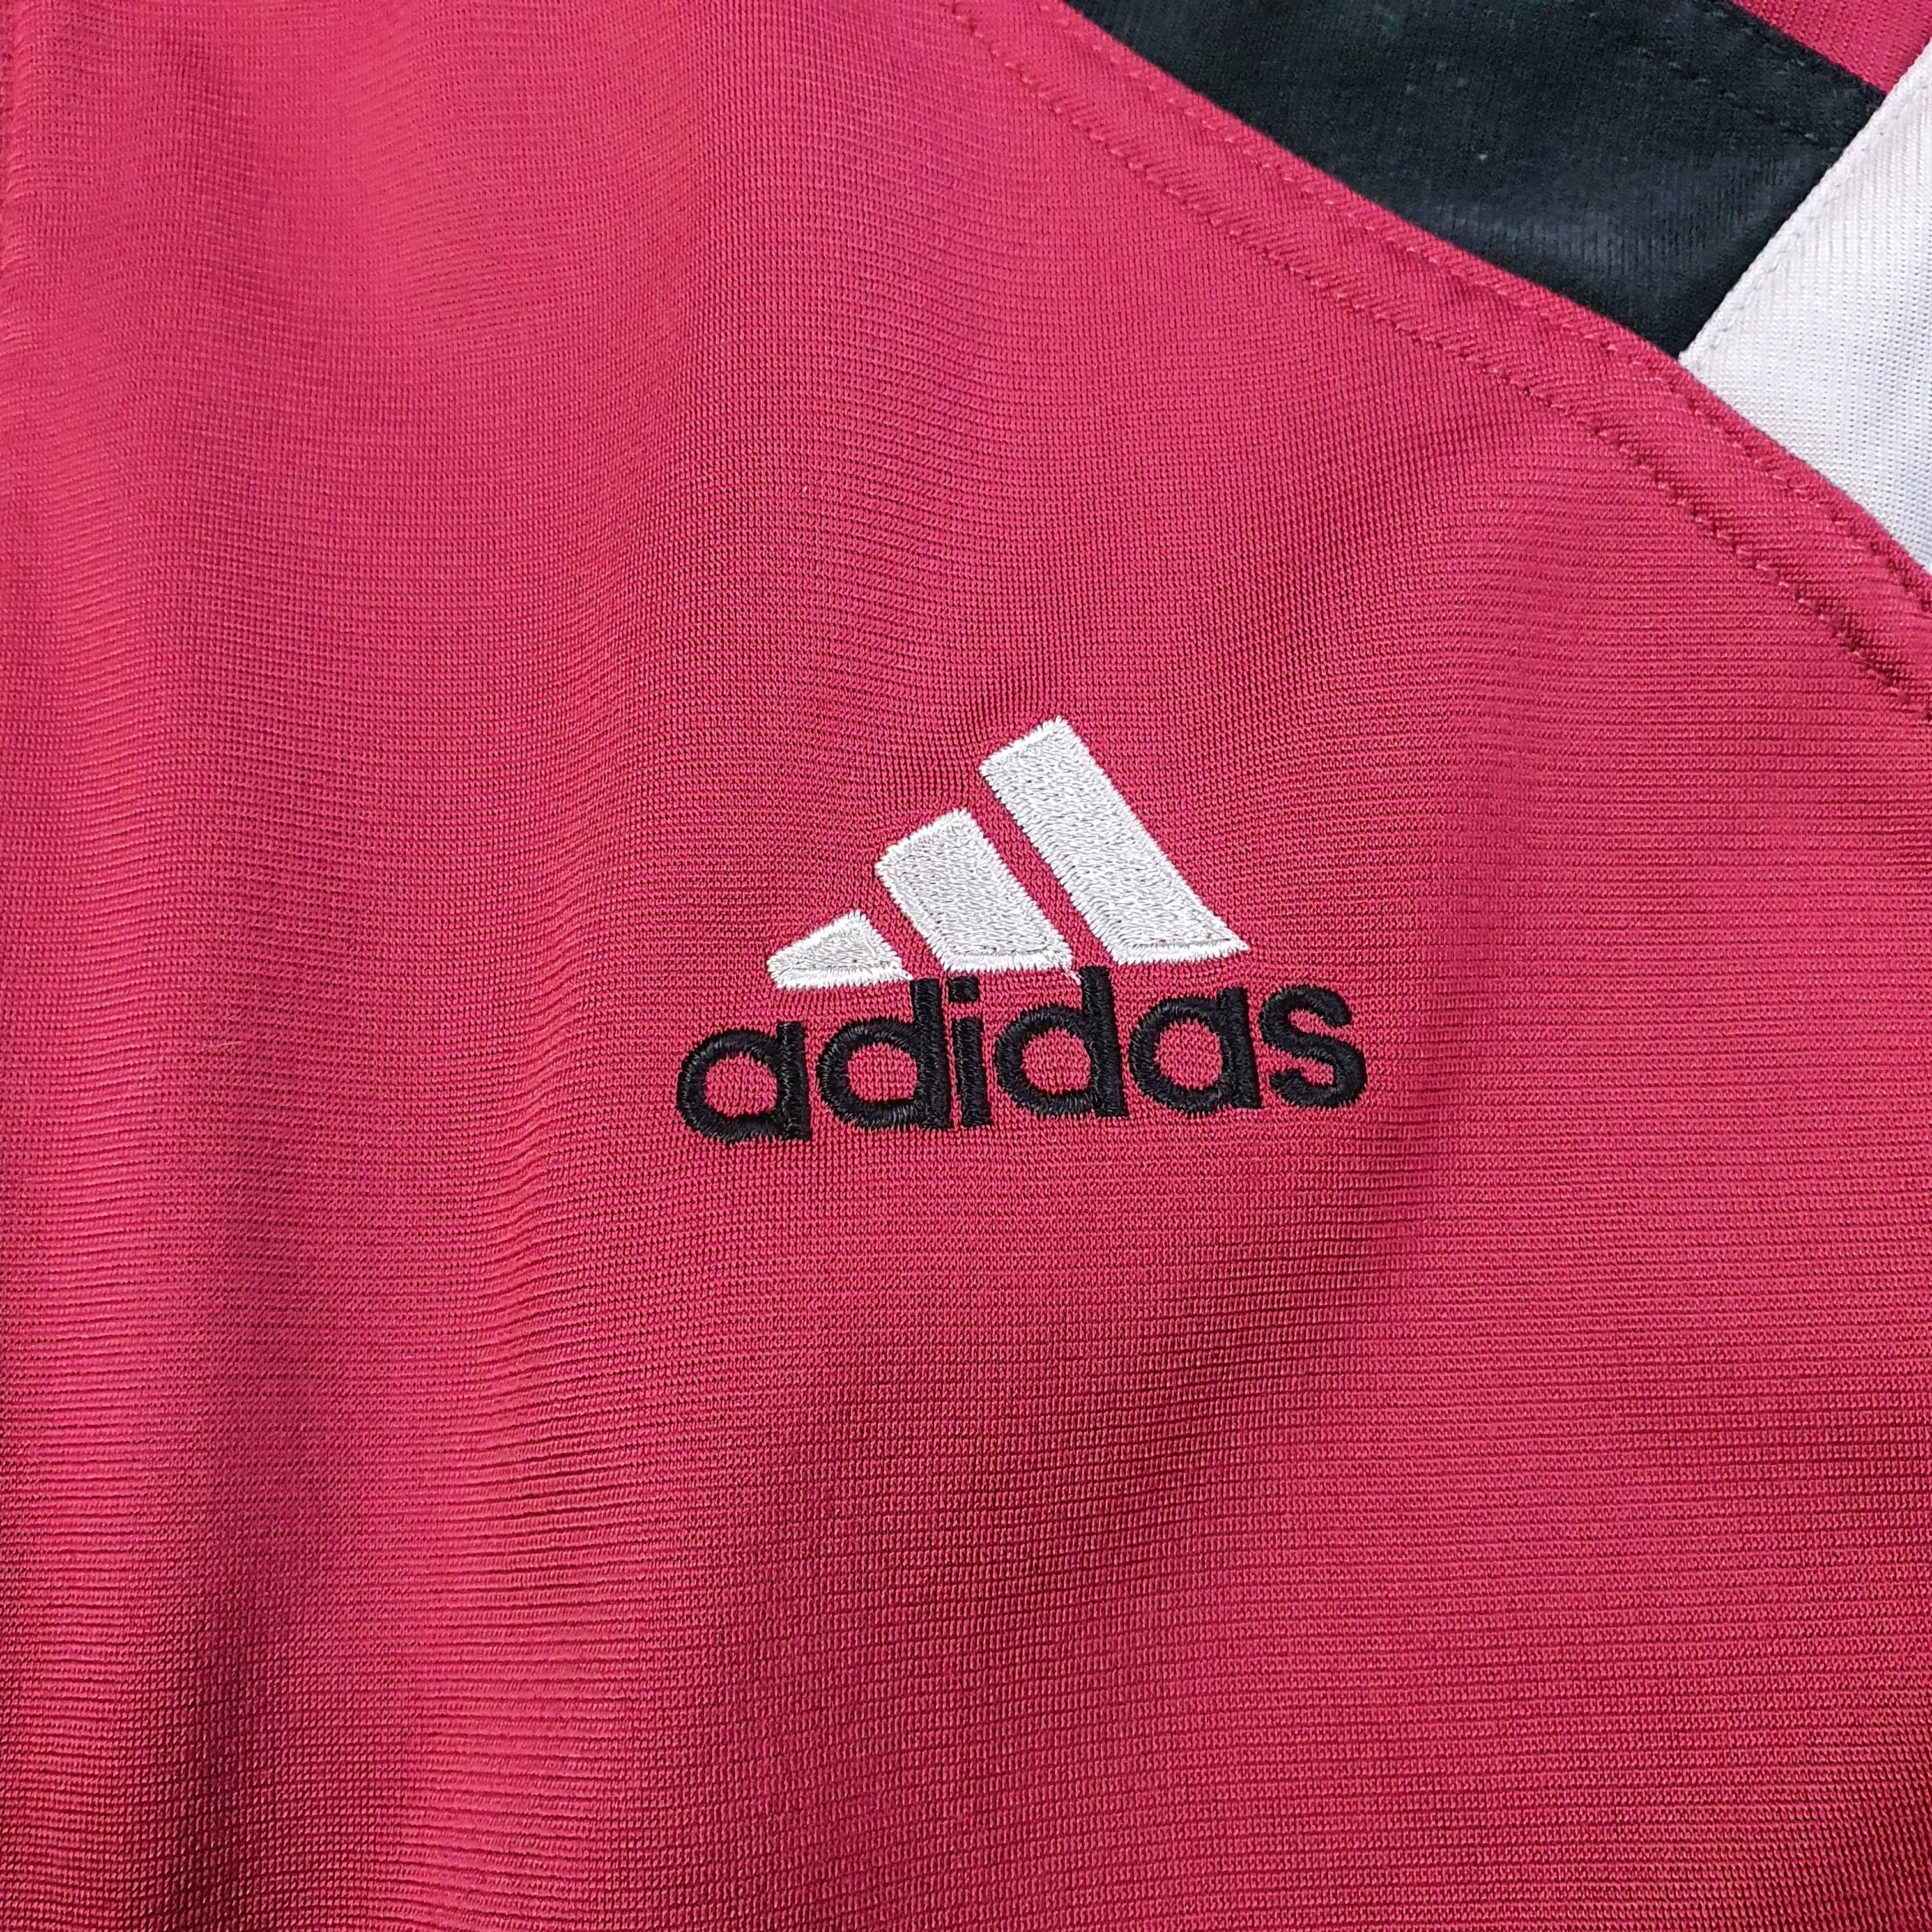 [M] Adidas Trackjacket